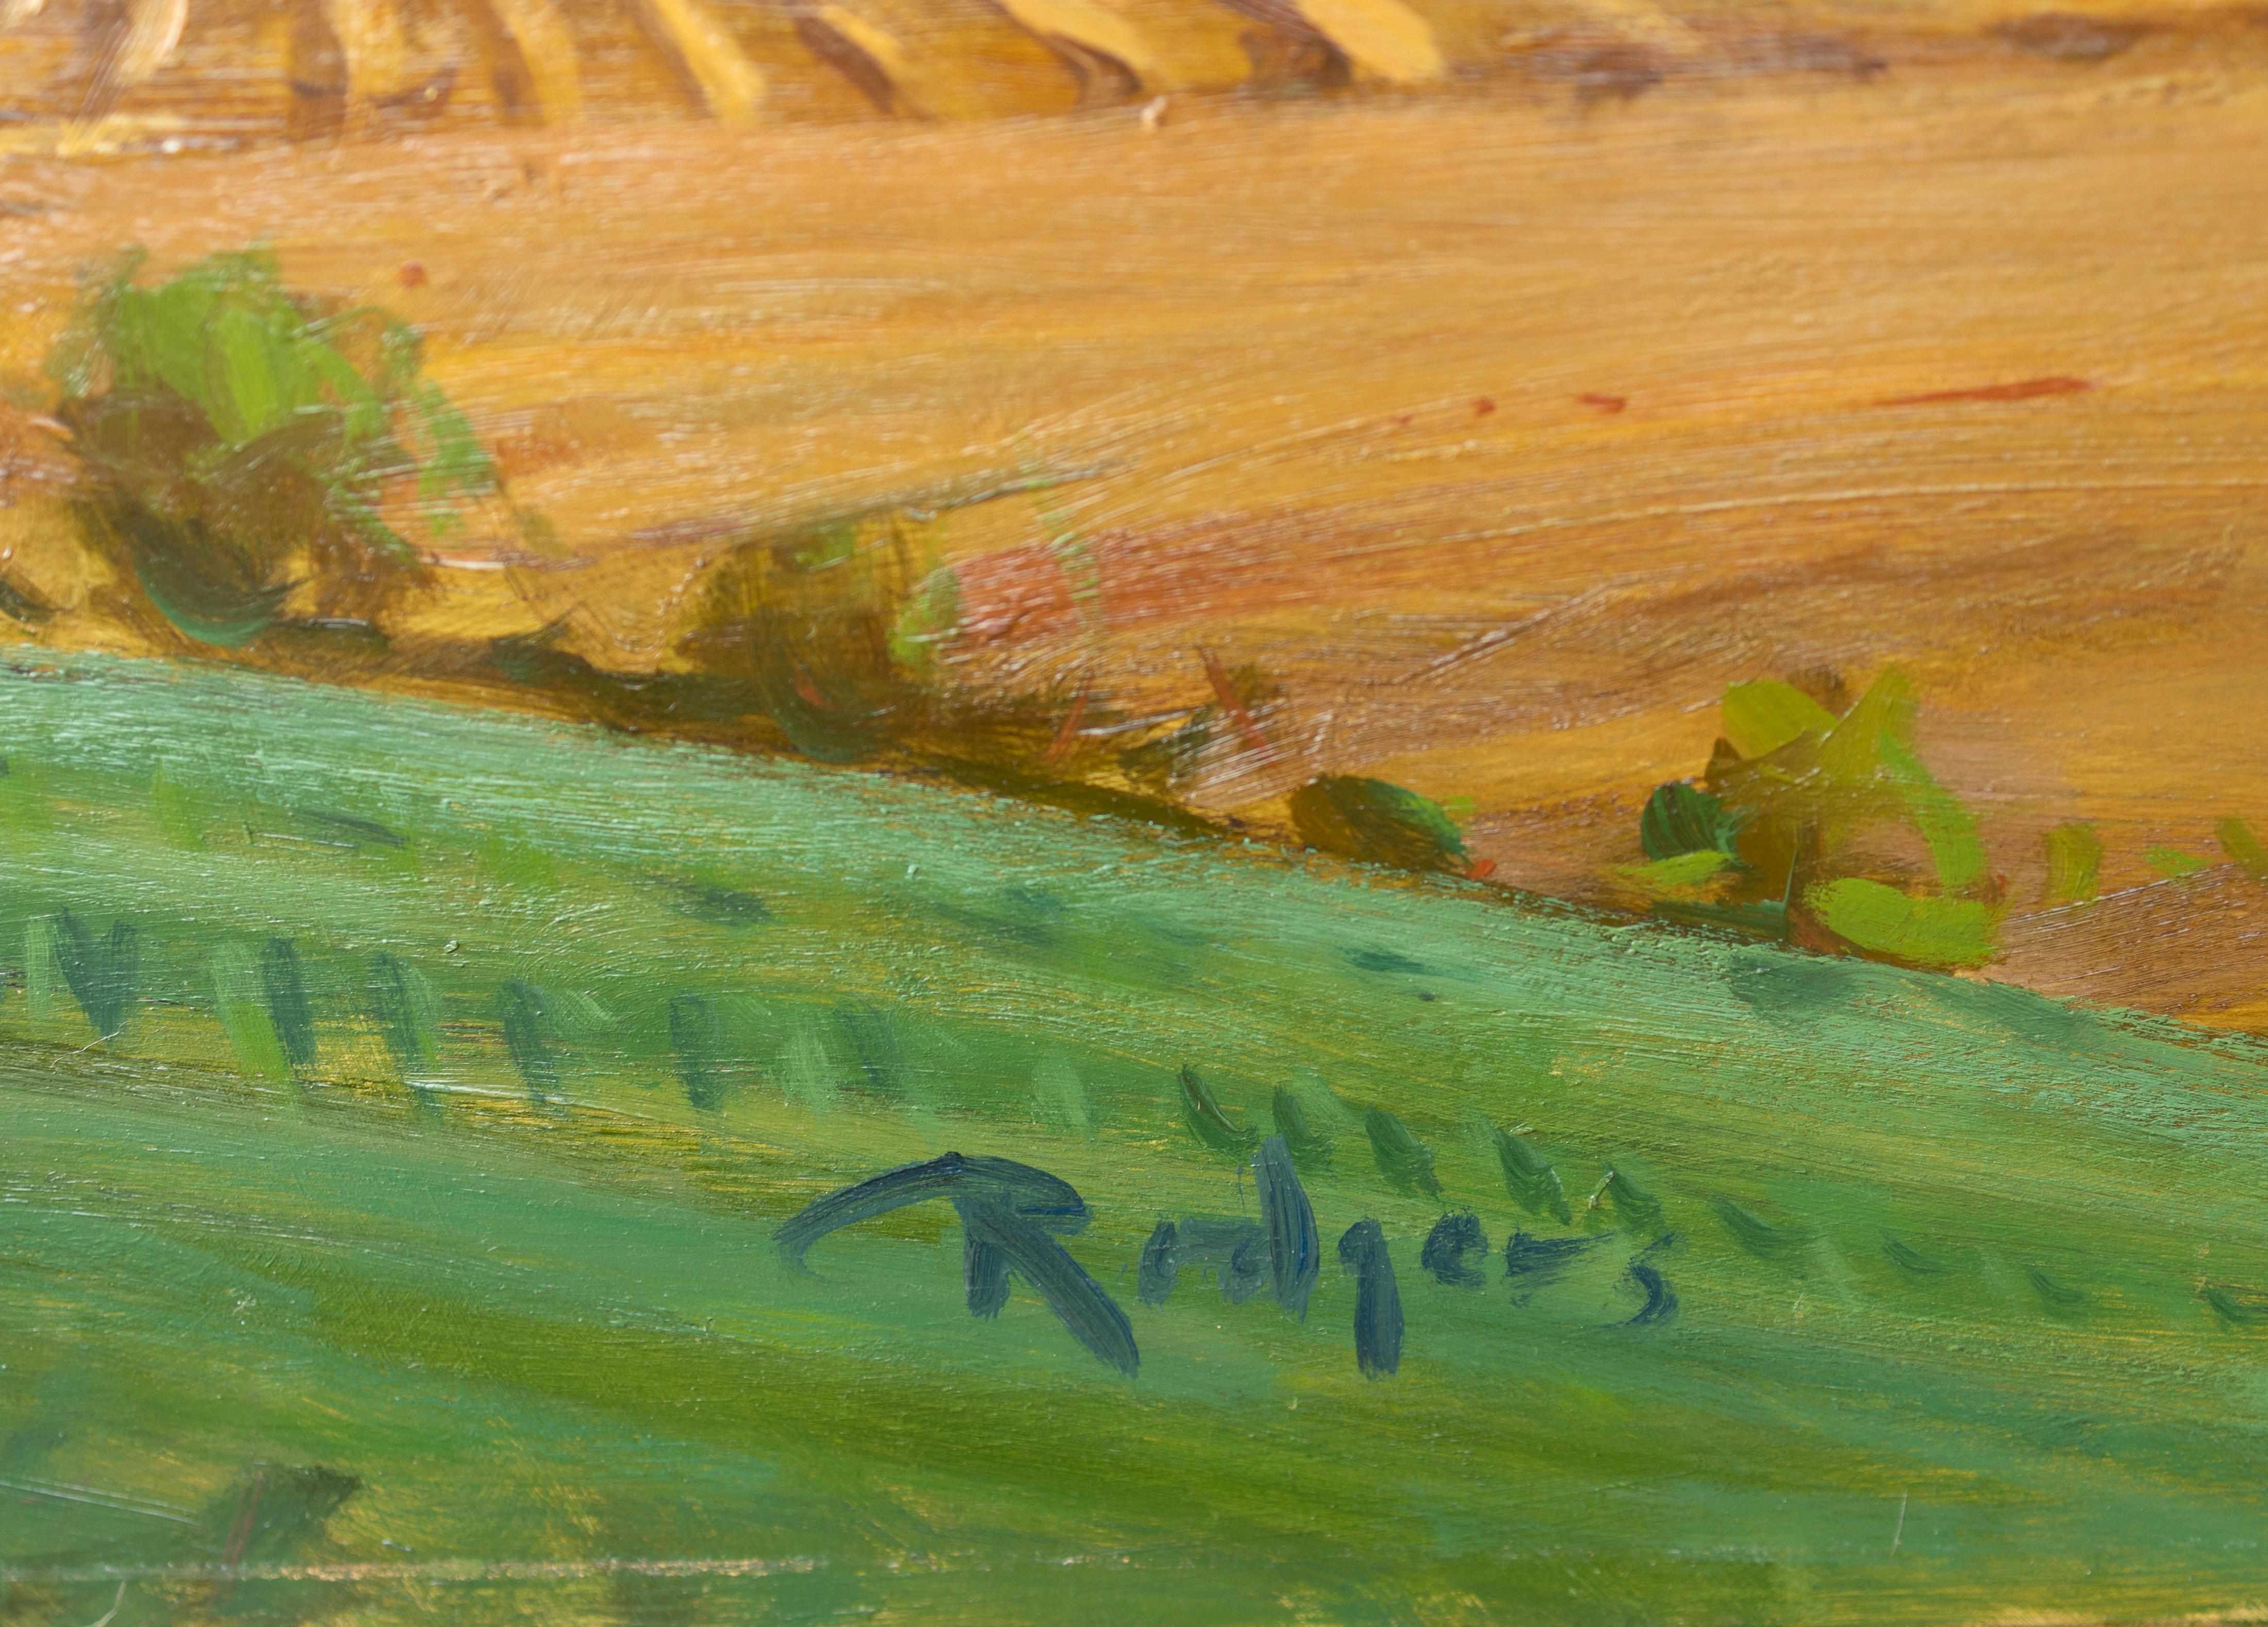 Ruffino Vineyards in Chianti - Painting by Jim Rodgers